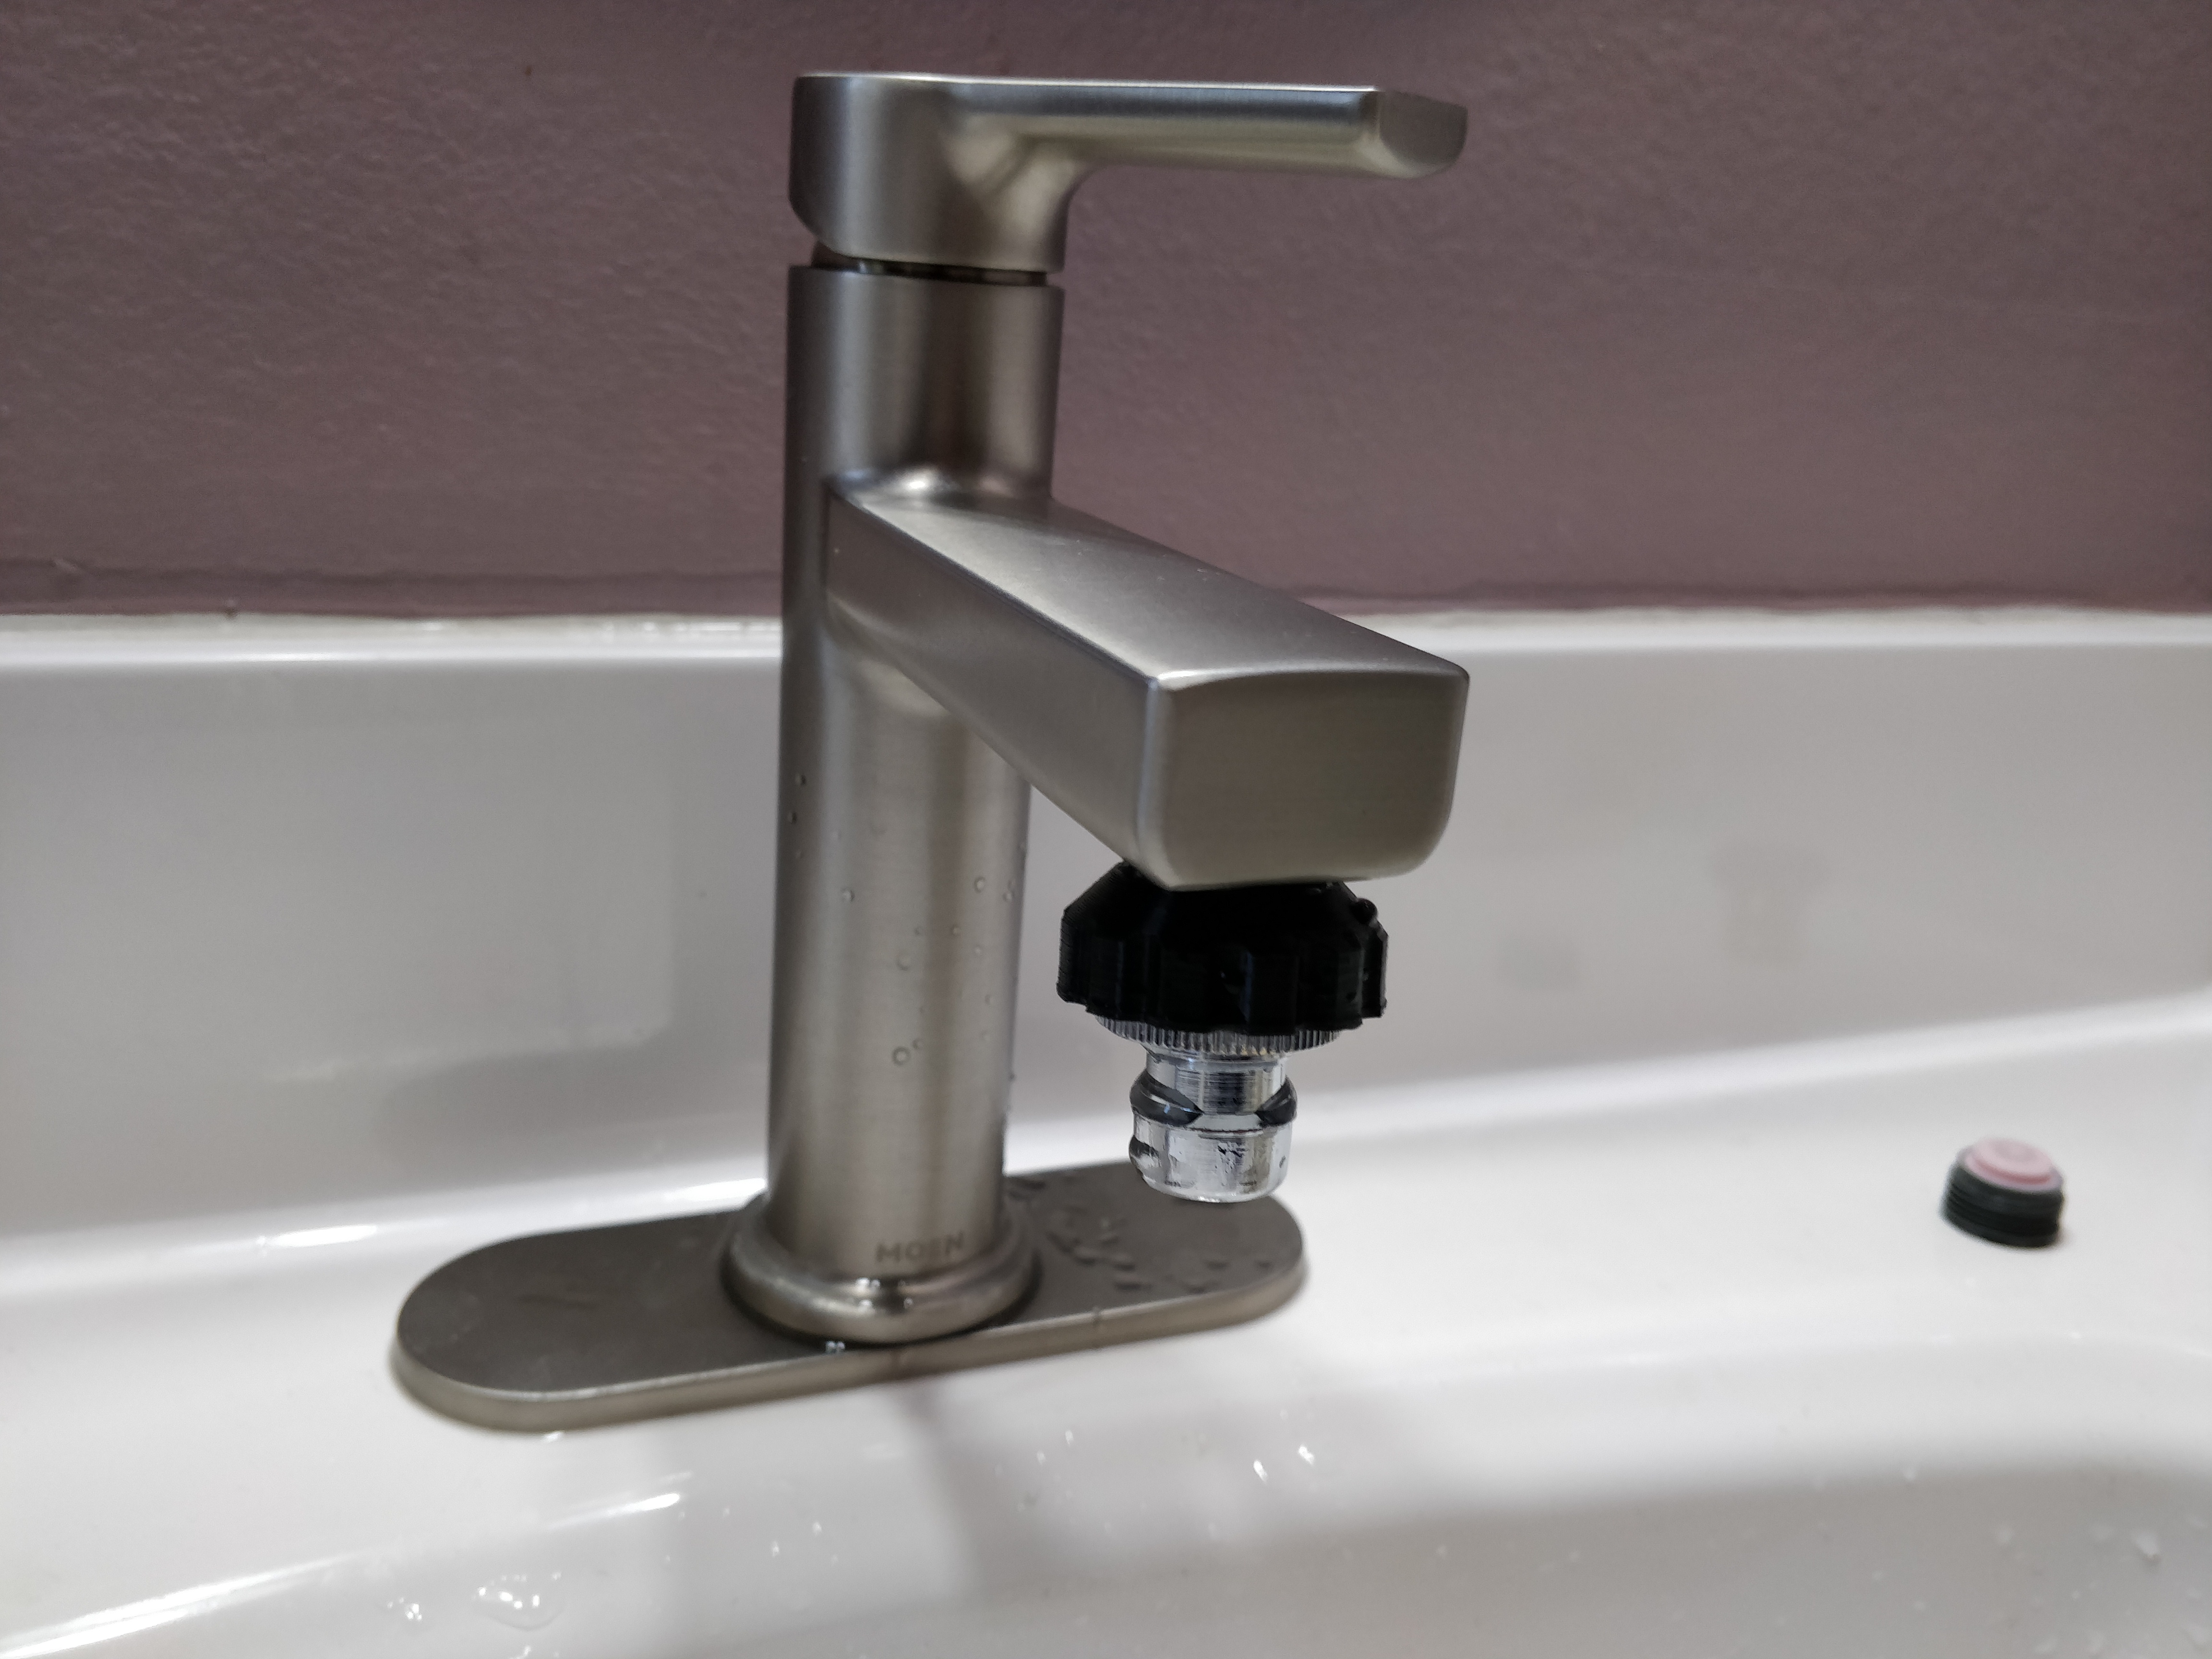 Sink to Hose Adapter (moen bathroom sink)